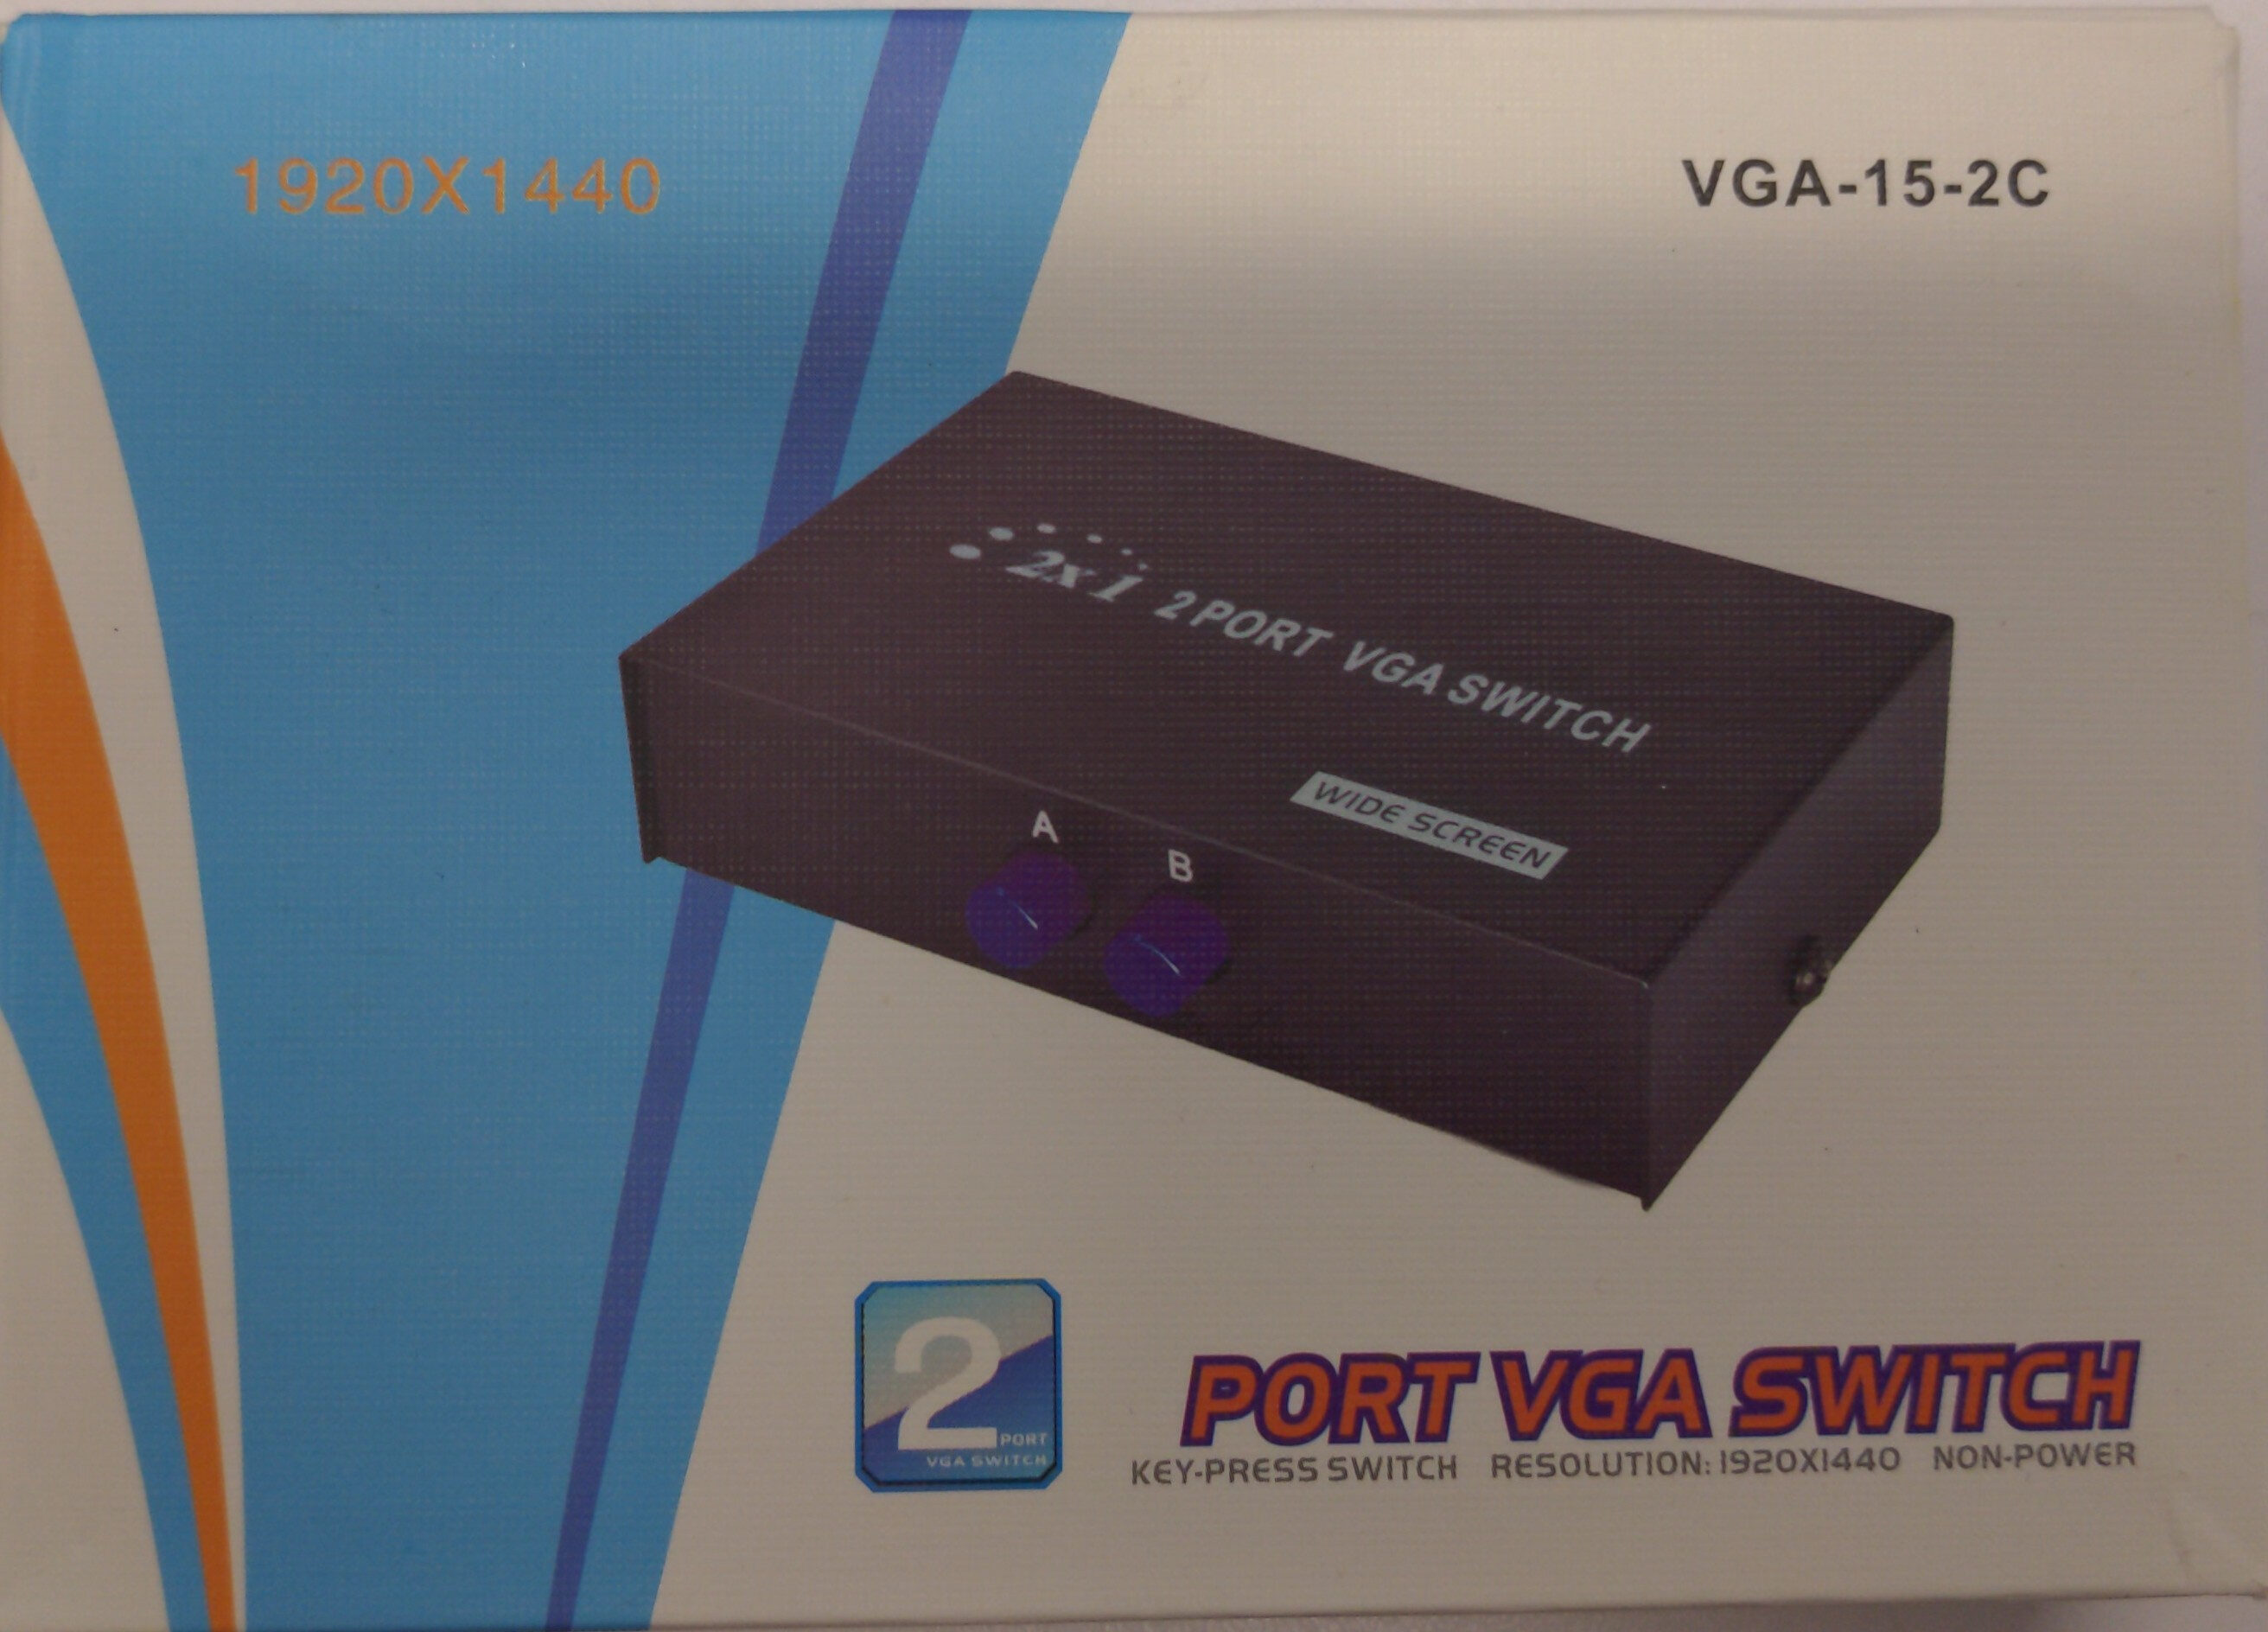 Port VGA switch - Product - en